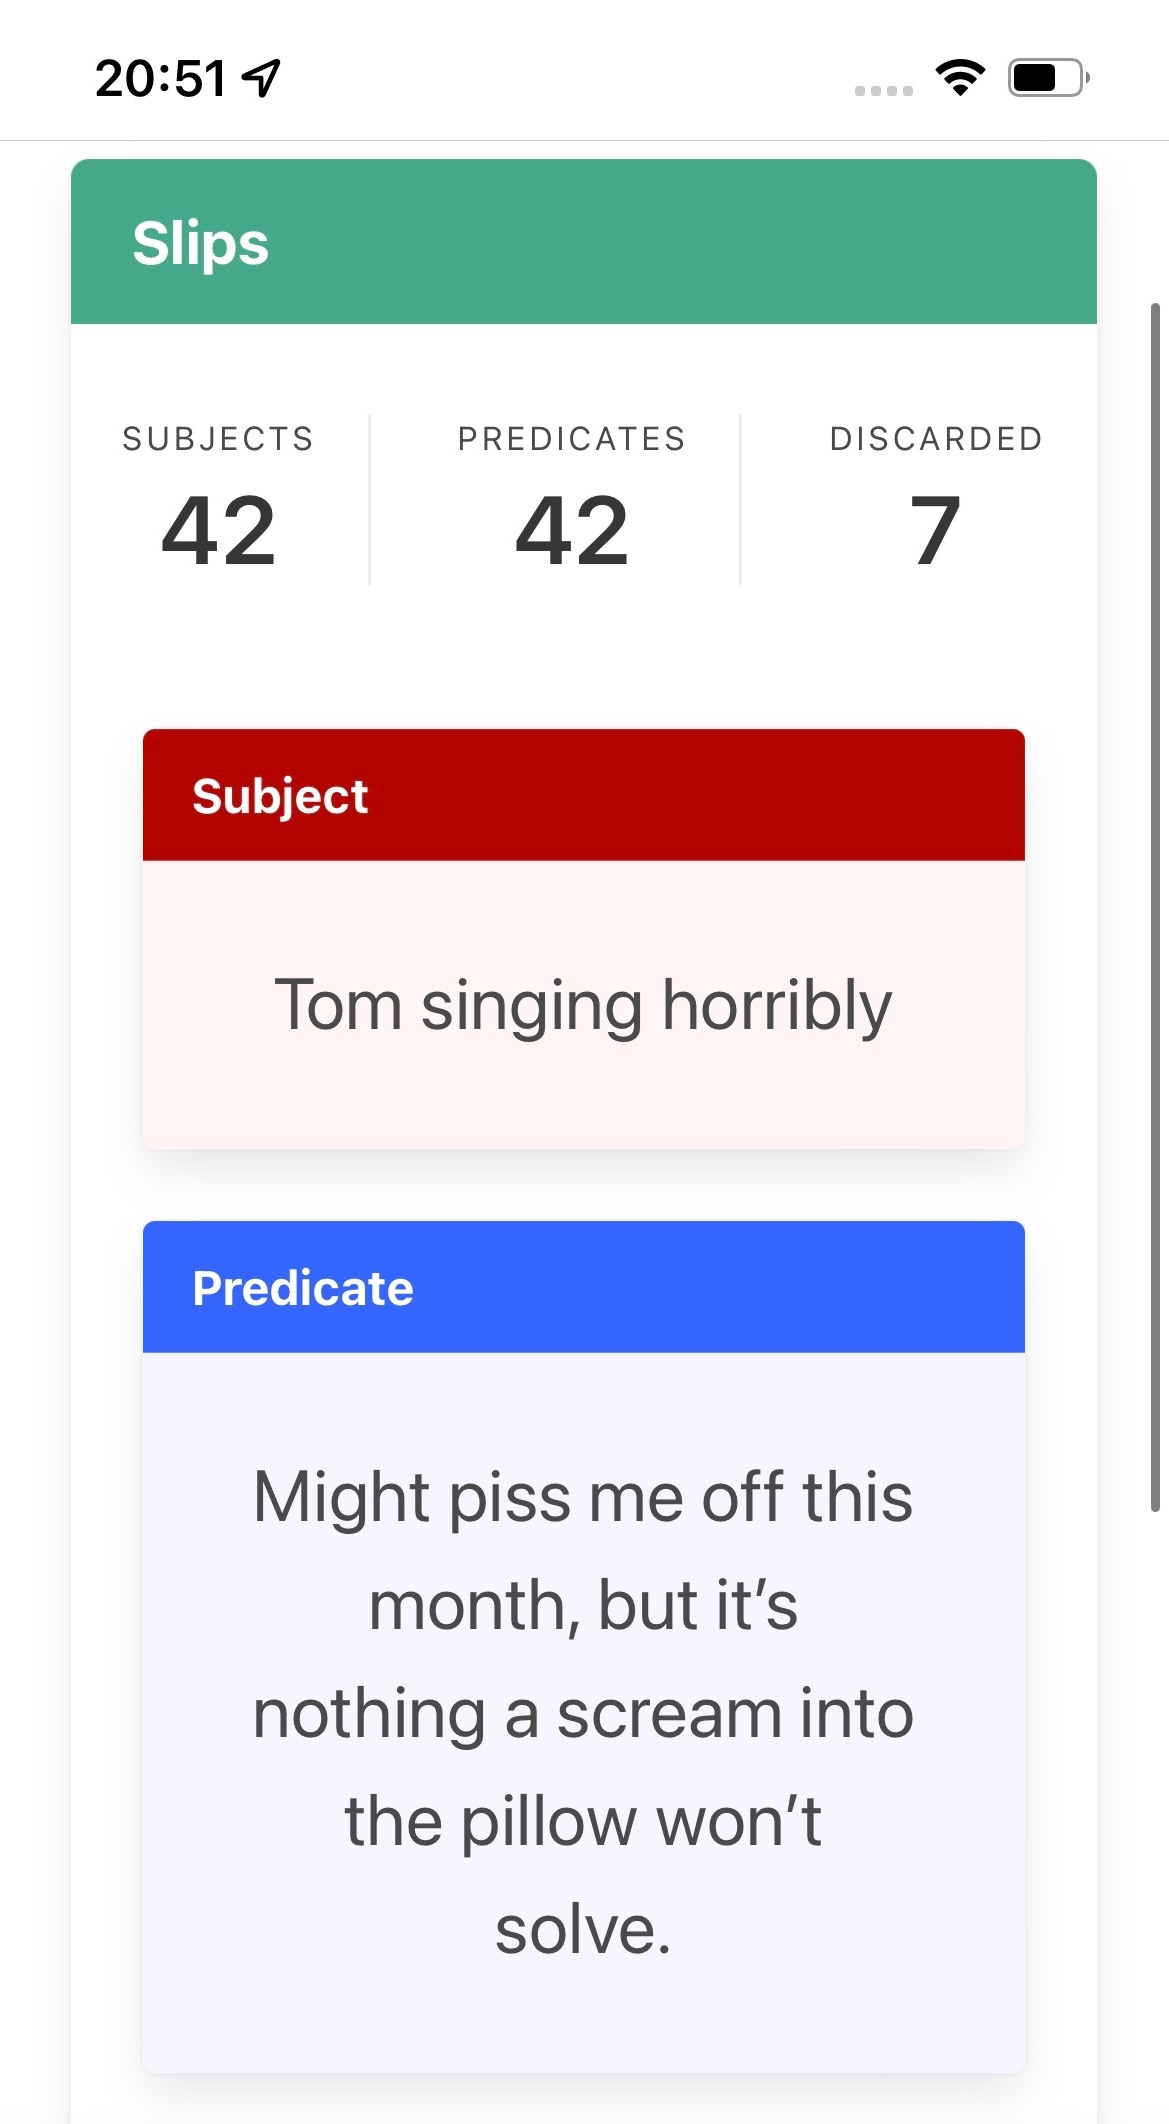 Fears of Tom's singing